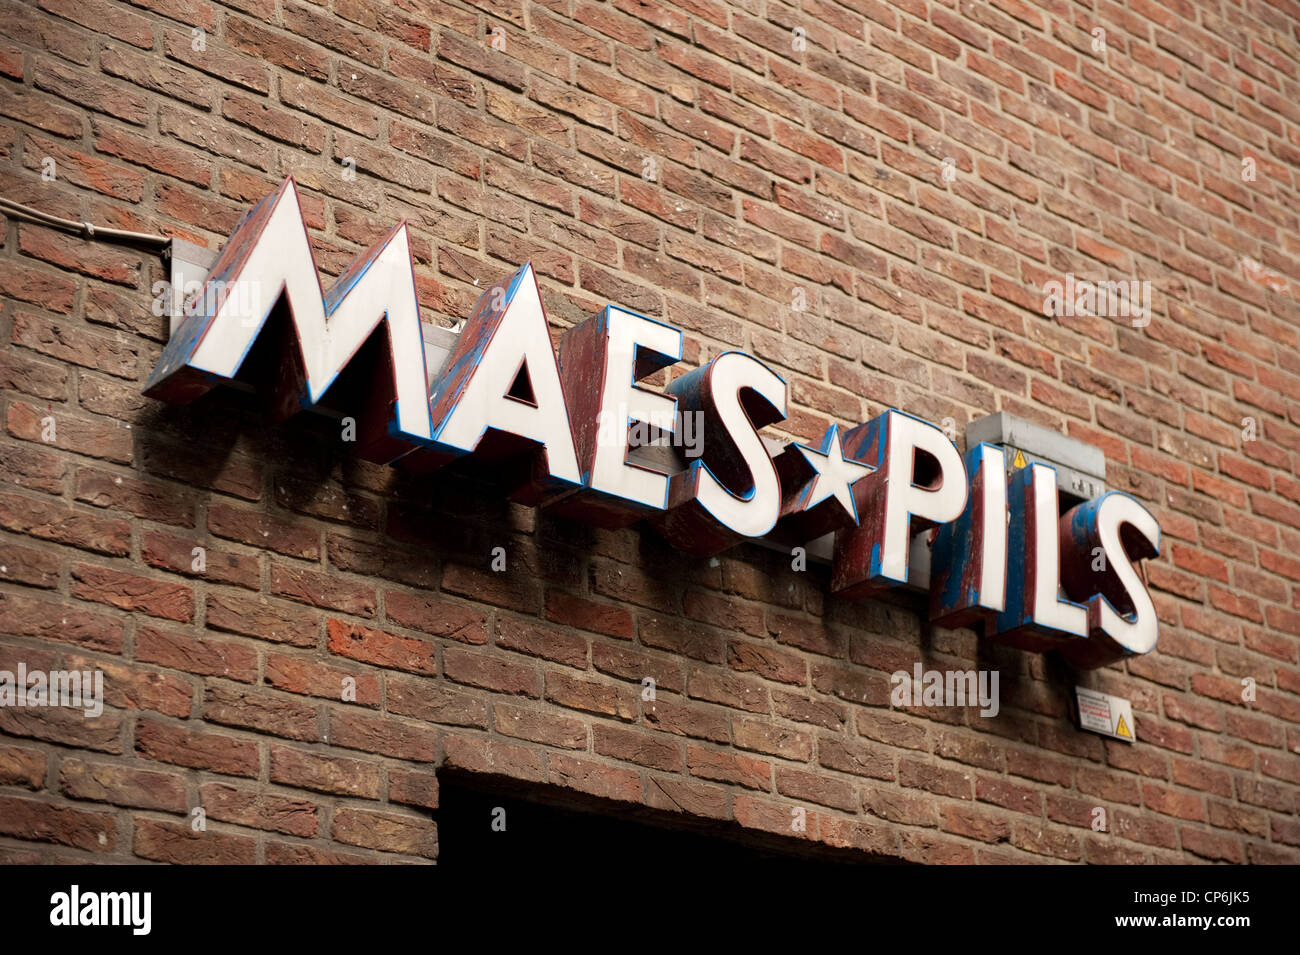 Maes Pils Beer Sign Hasselt Belgium Europe EU Stock Photo